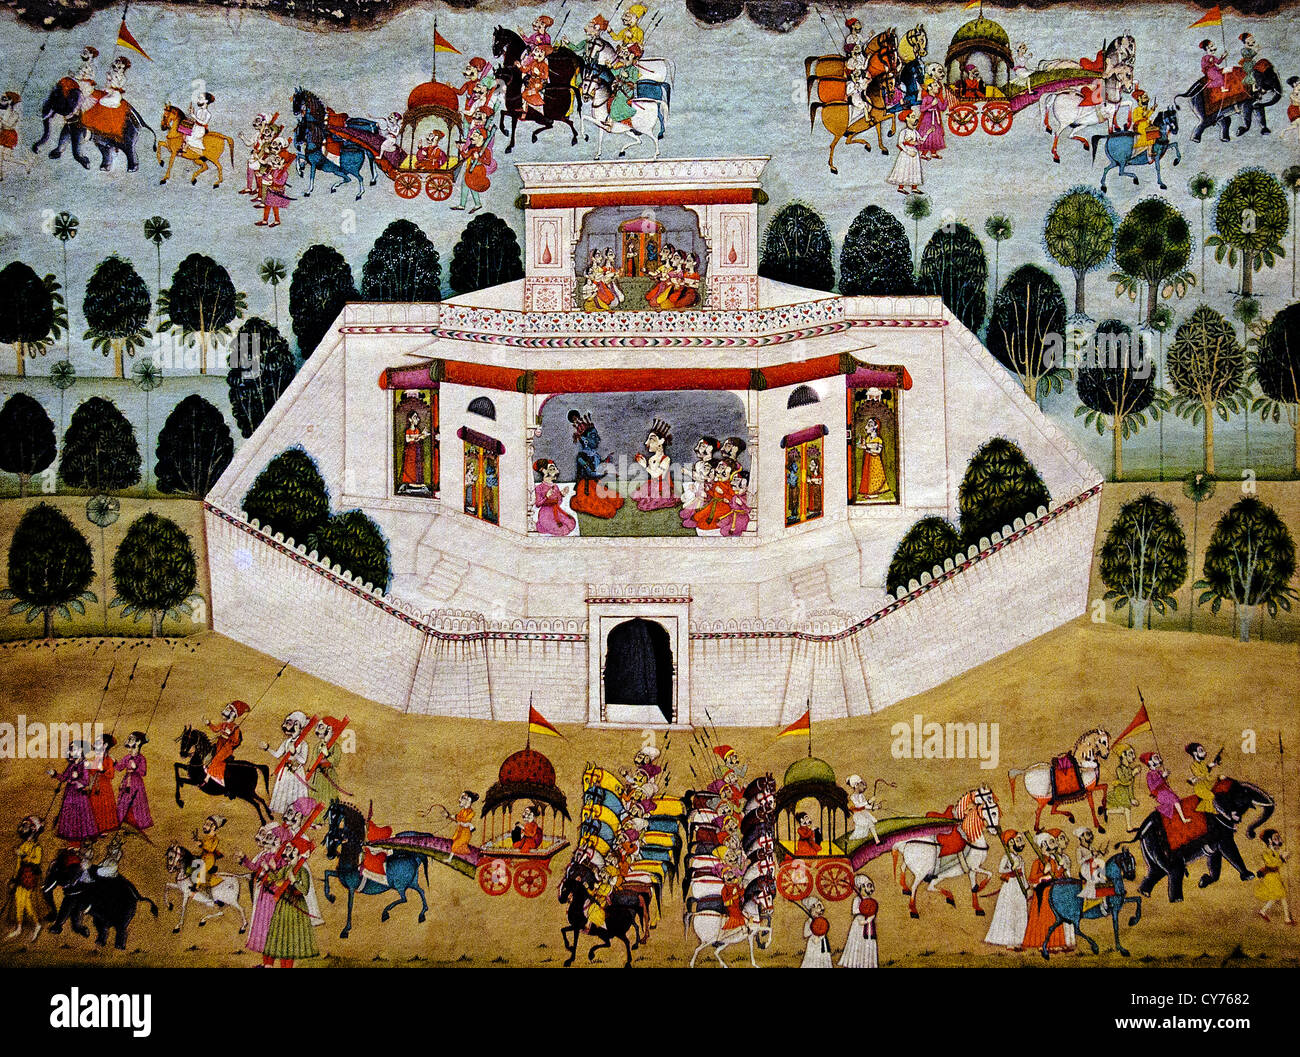 Krishna et Balarama dans un palais fortifié Bhagavata Purana histoires anciennes du seigneur Vishnu 1700 Inde Rajasthan Bikaner 37 Banque D'Images